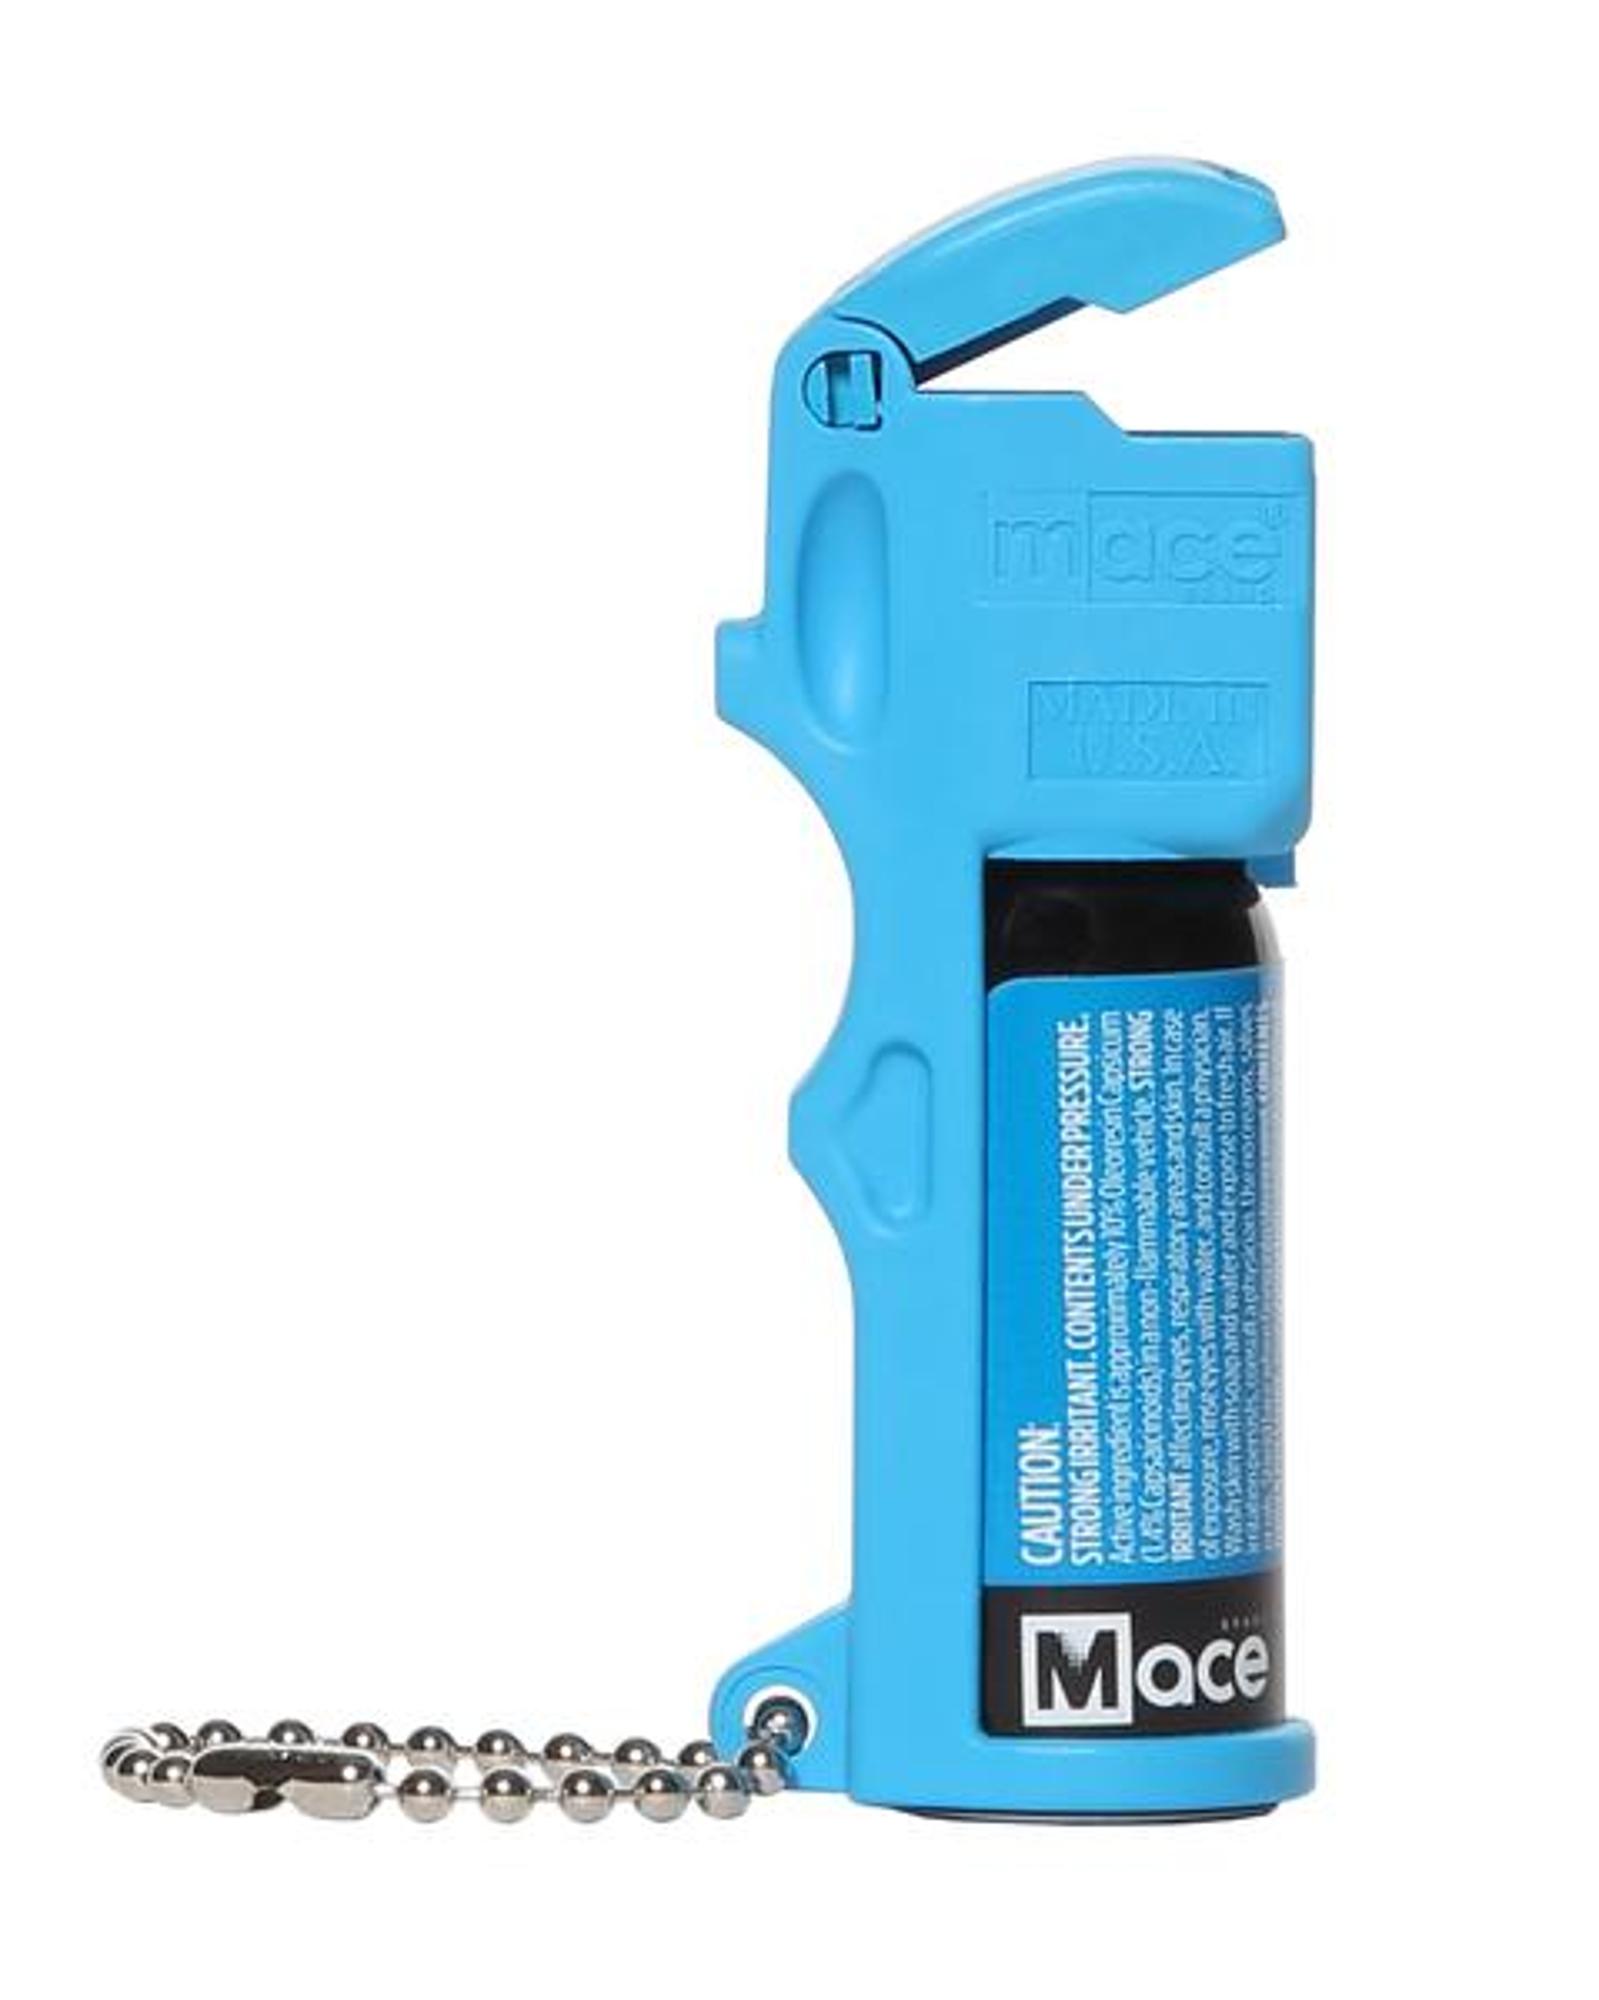 Mace Pocket Pepper Spray - Neon Blue